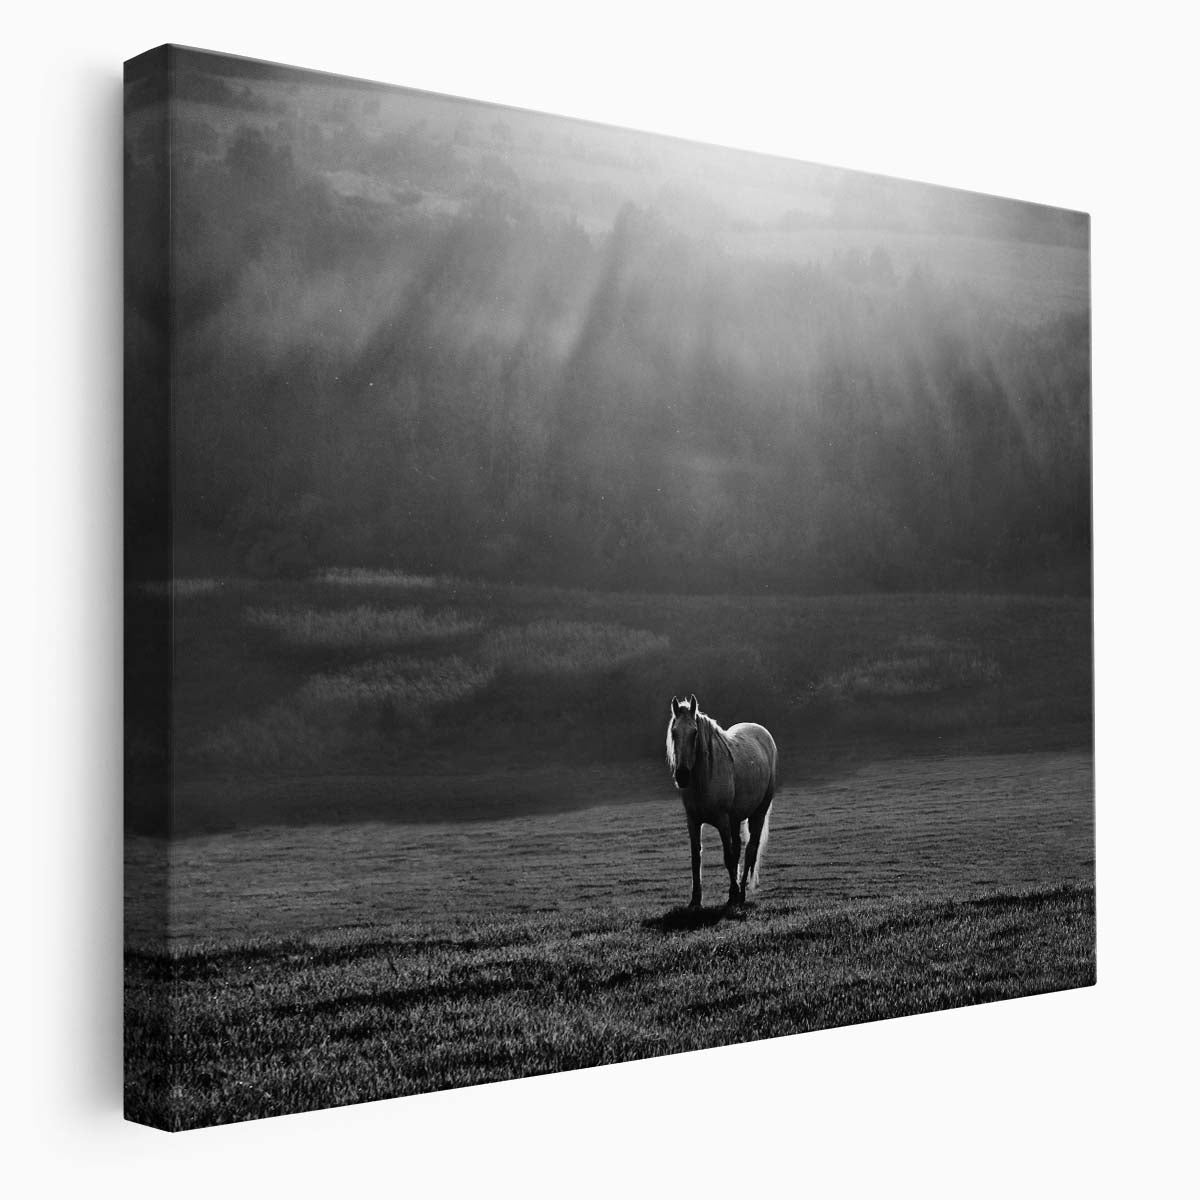 Slovakian Sunrise Horse in Monochrome Field Wall Art by Luxuriance Designs. Made in USA.